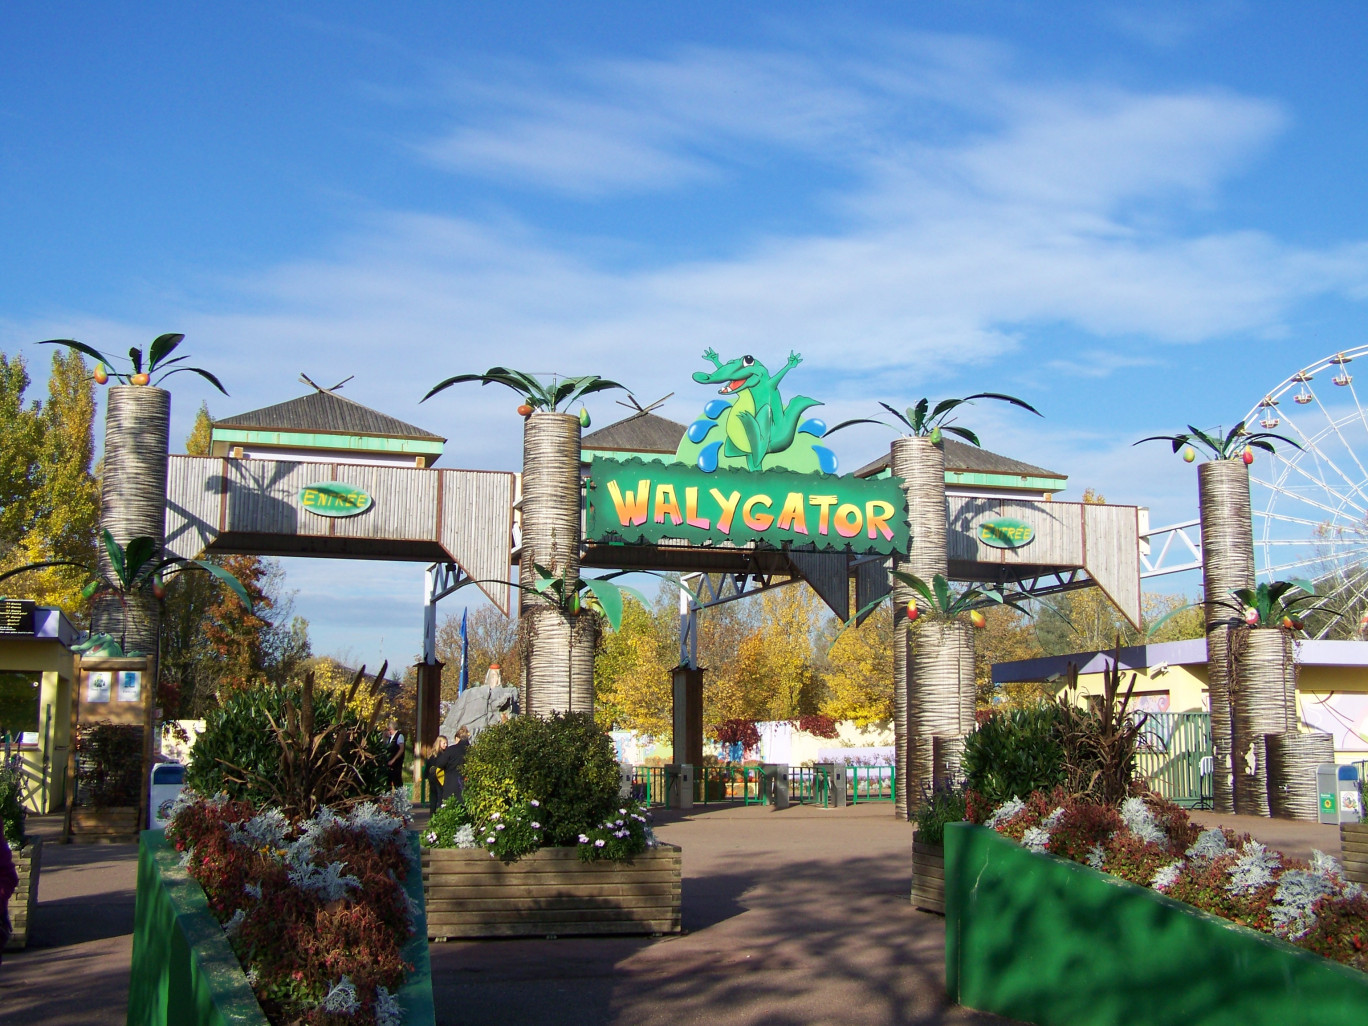 Le parc d’attraction Walygator recrute